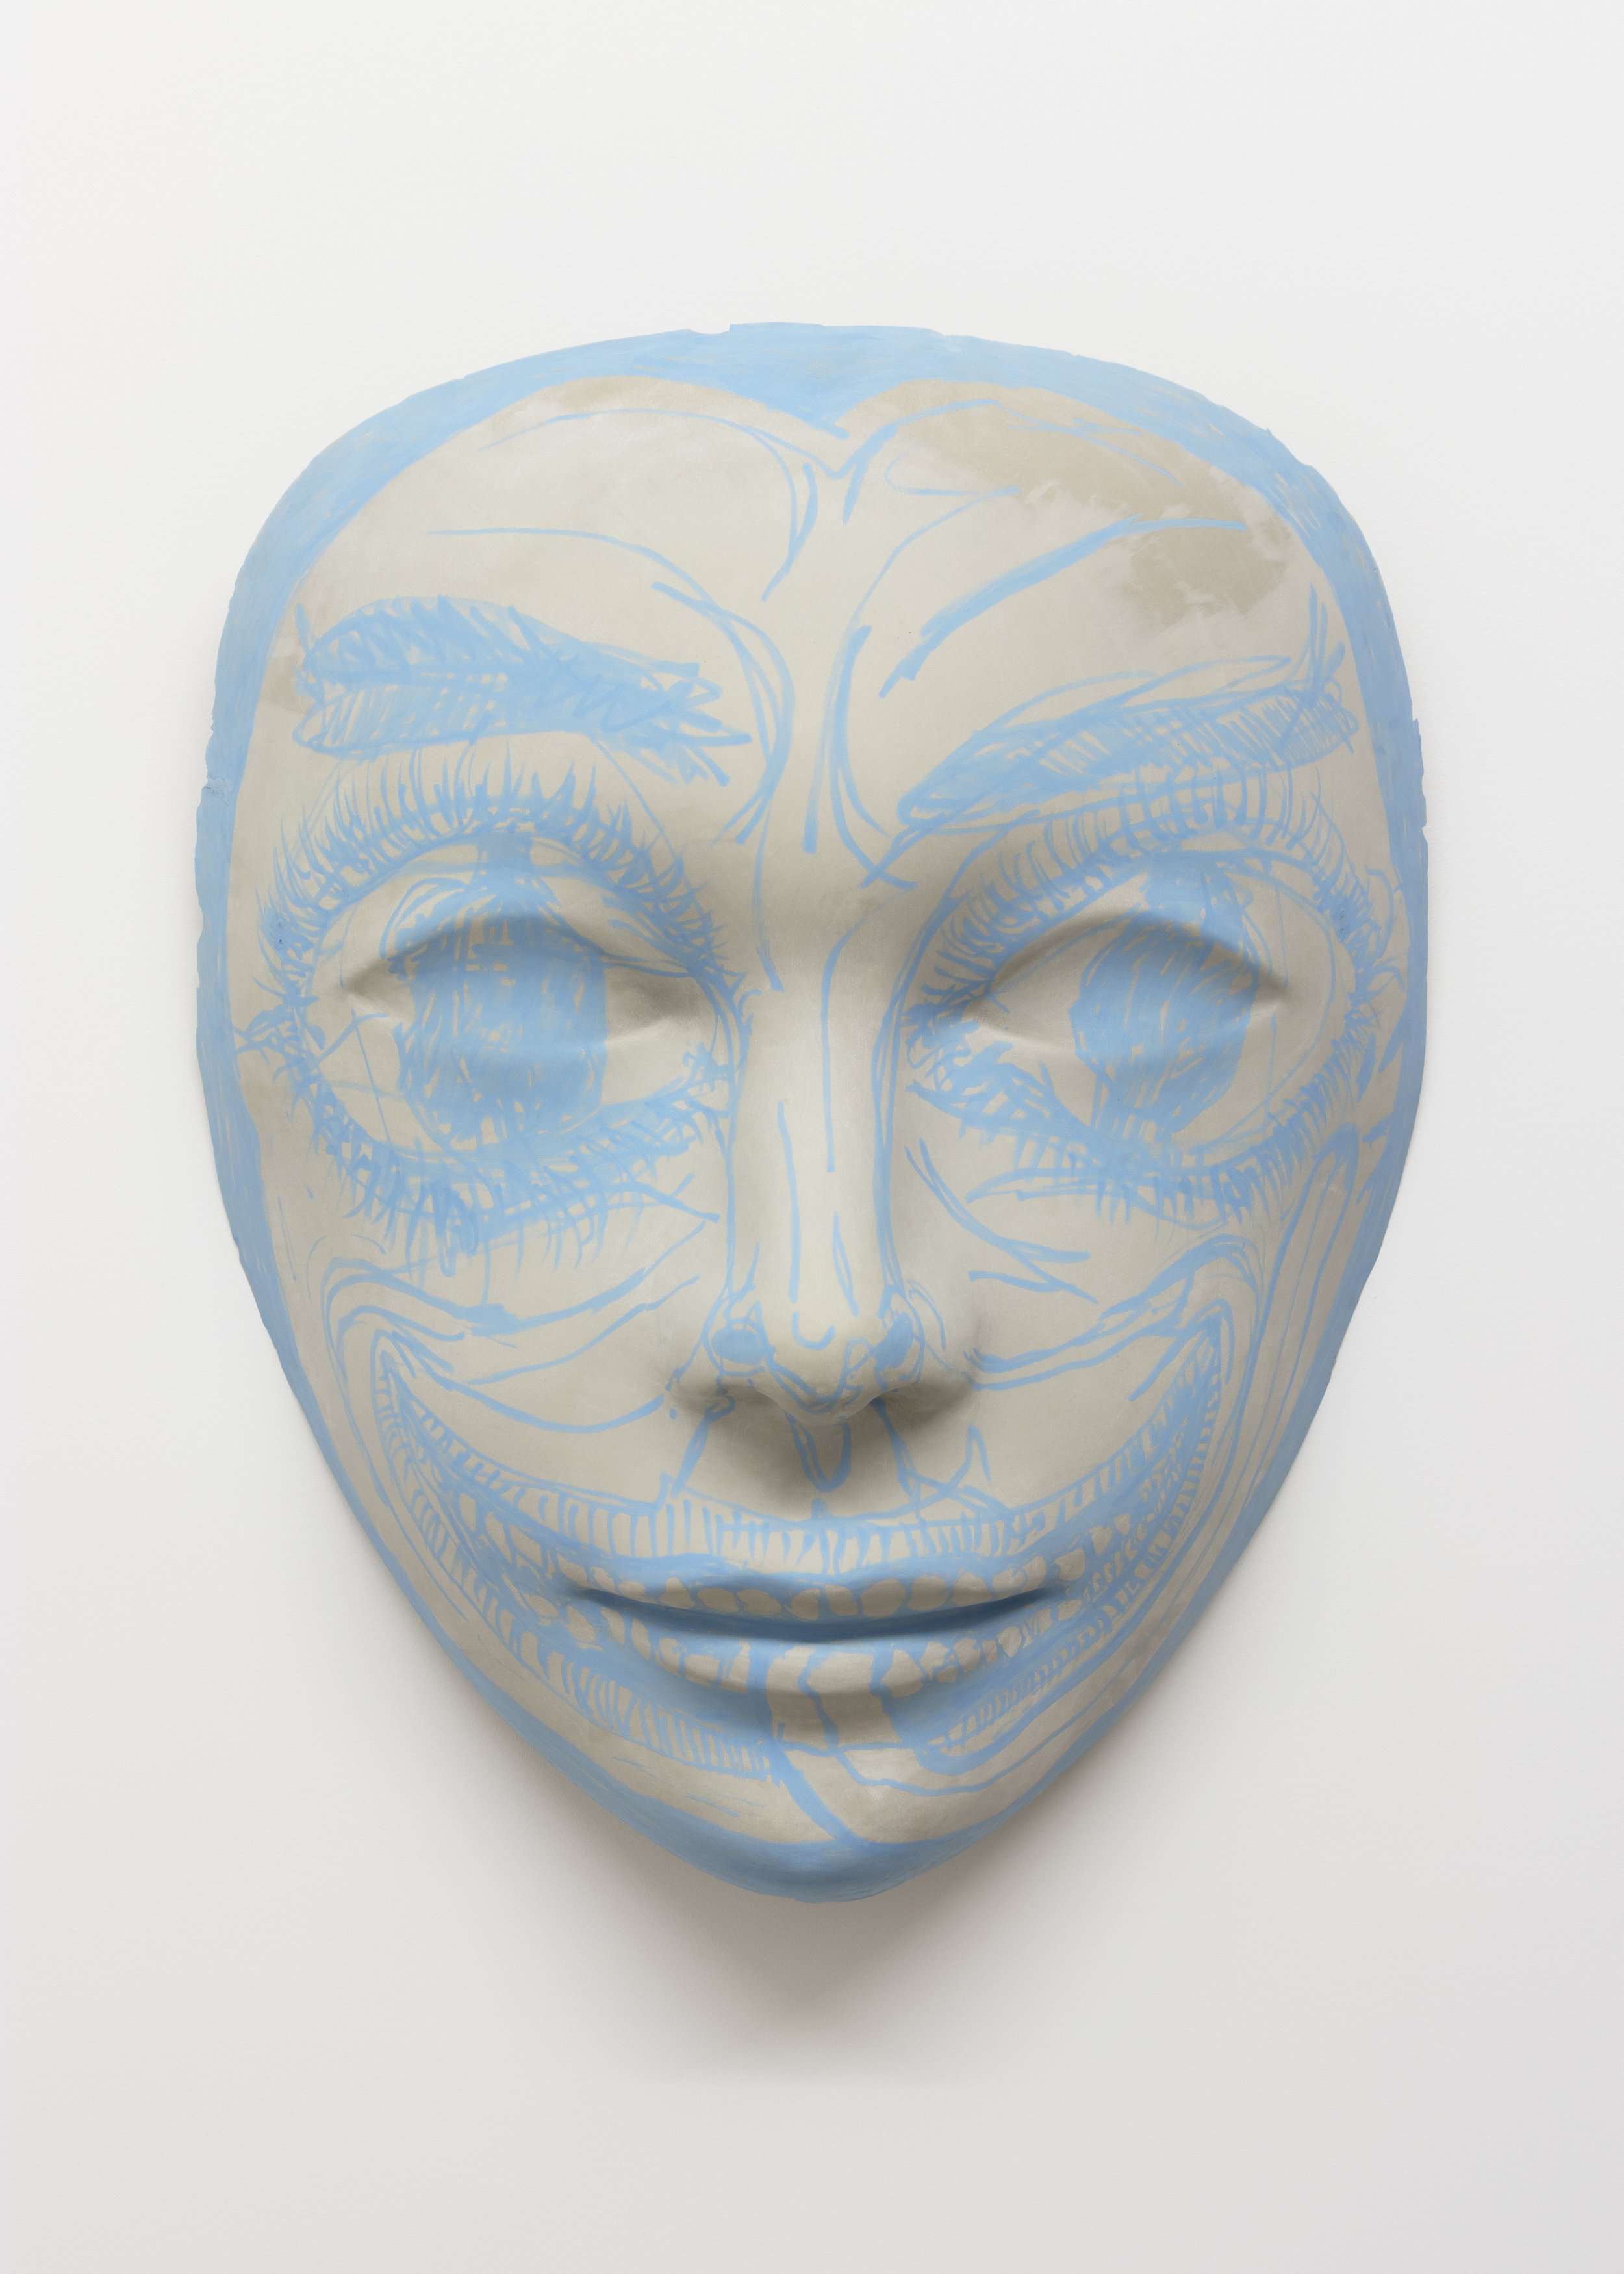  Chloe Seibert,  Mask 3 , Urethane plastic, fiberglass, acrylic paint, 42 x 33 x 17”, 2019    